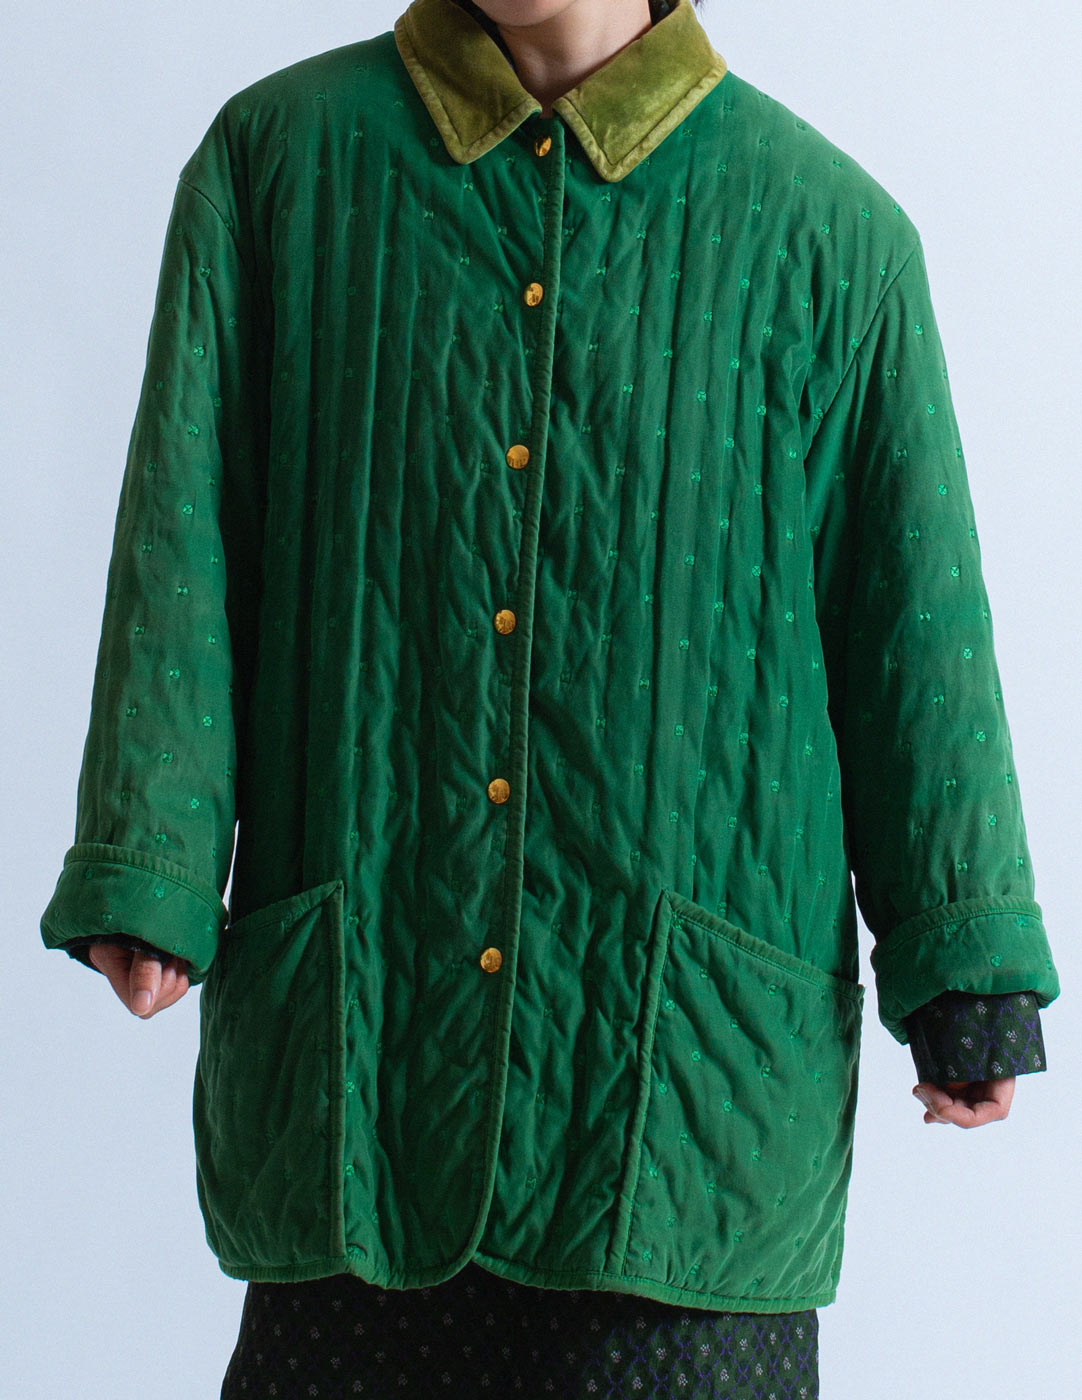 Hermès vintage green quilted coat detail